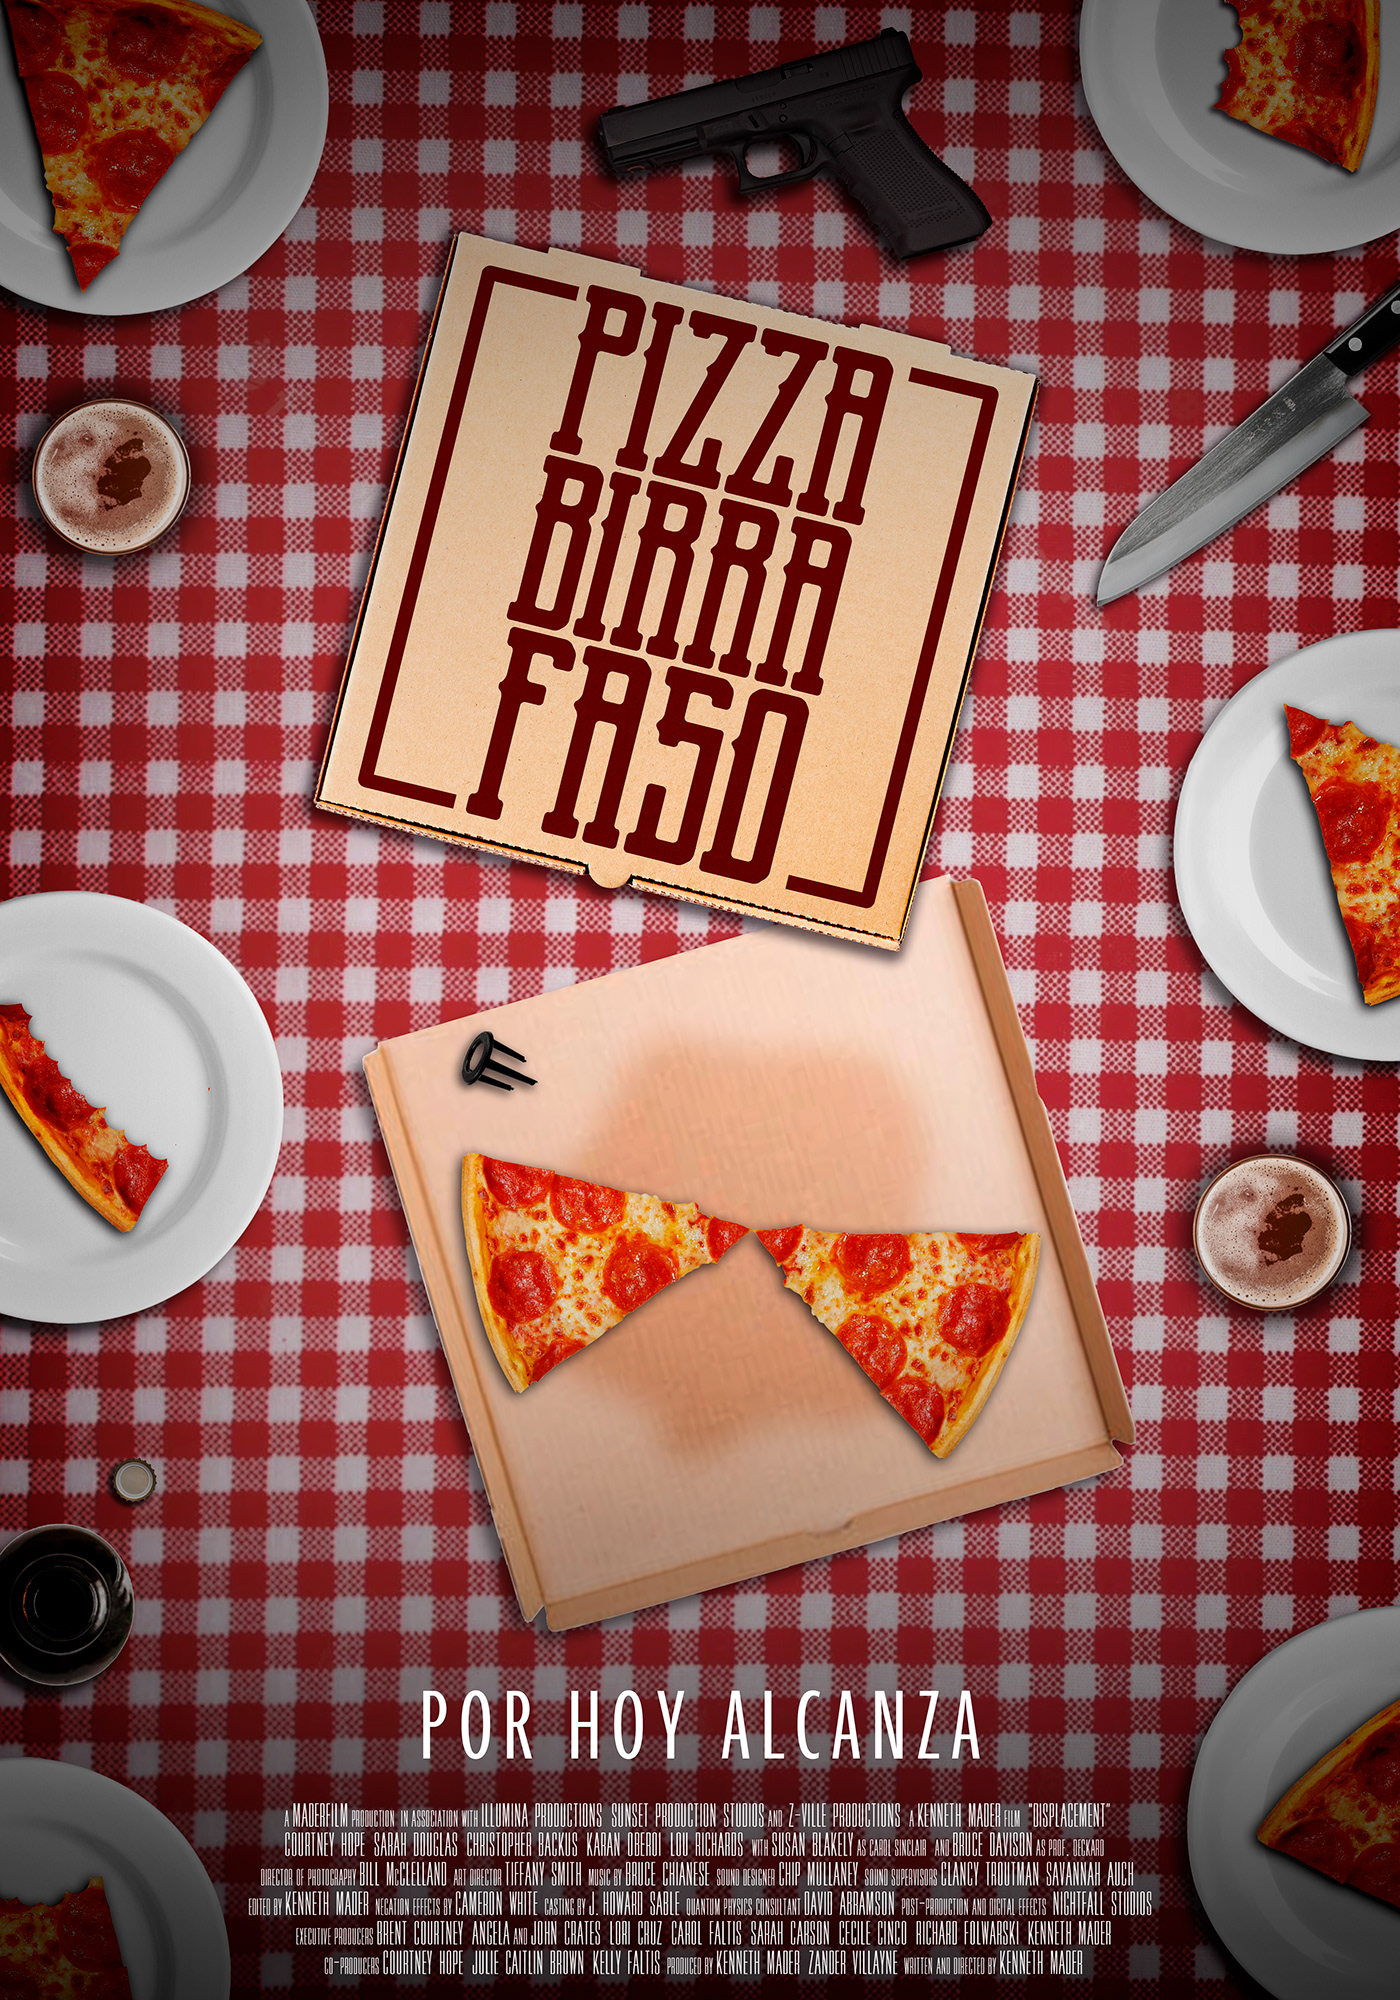 Pizza birra faso landing page movie poster